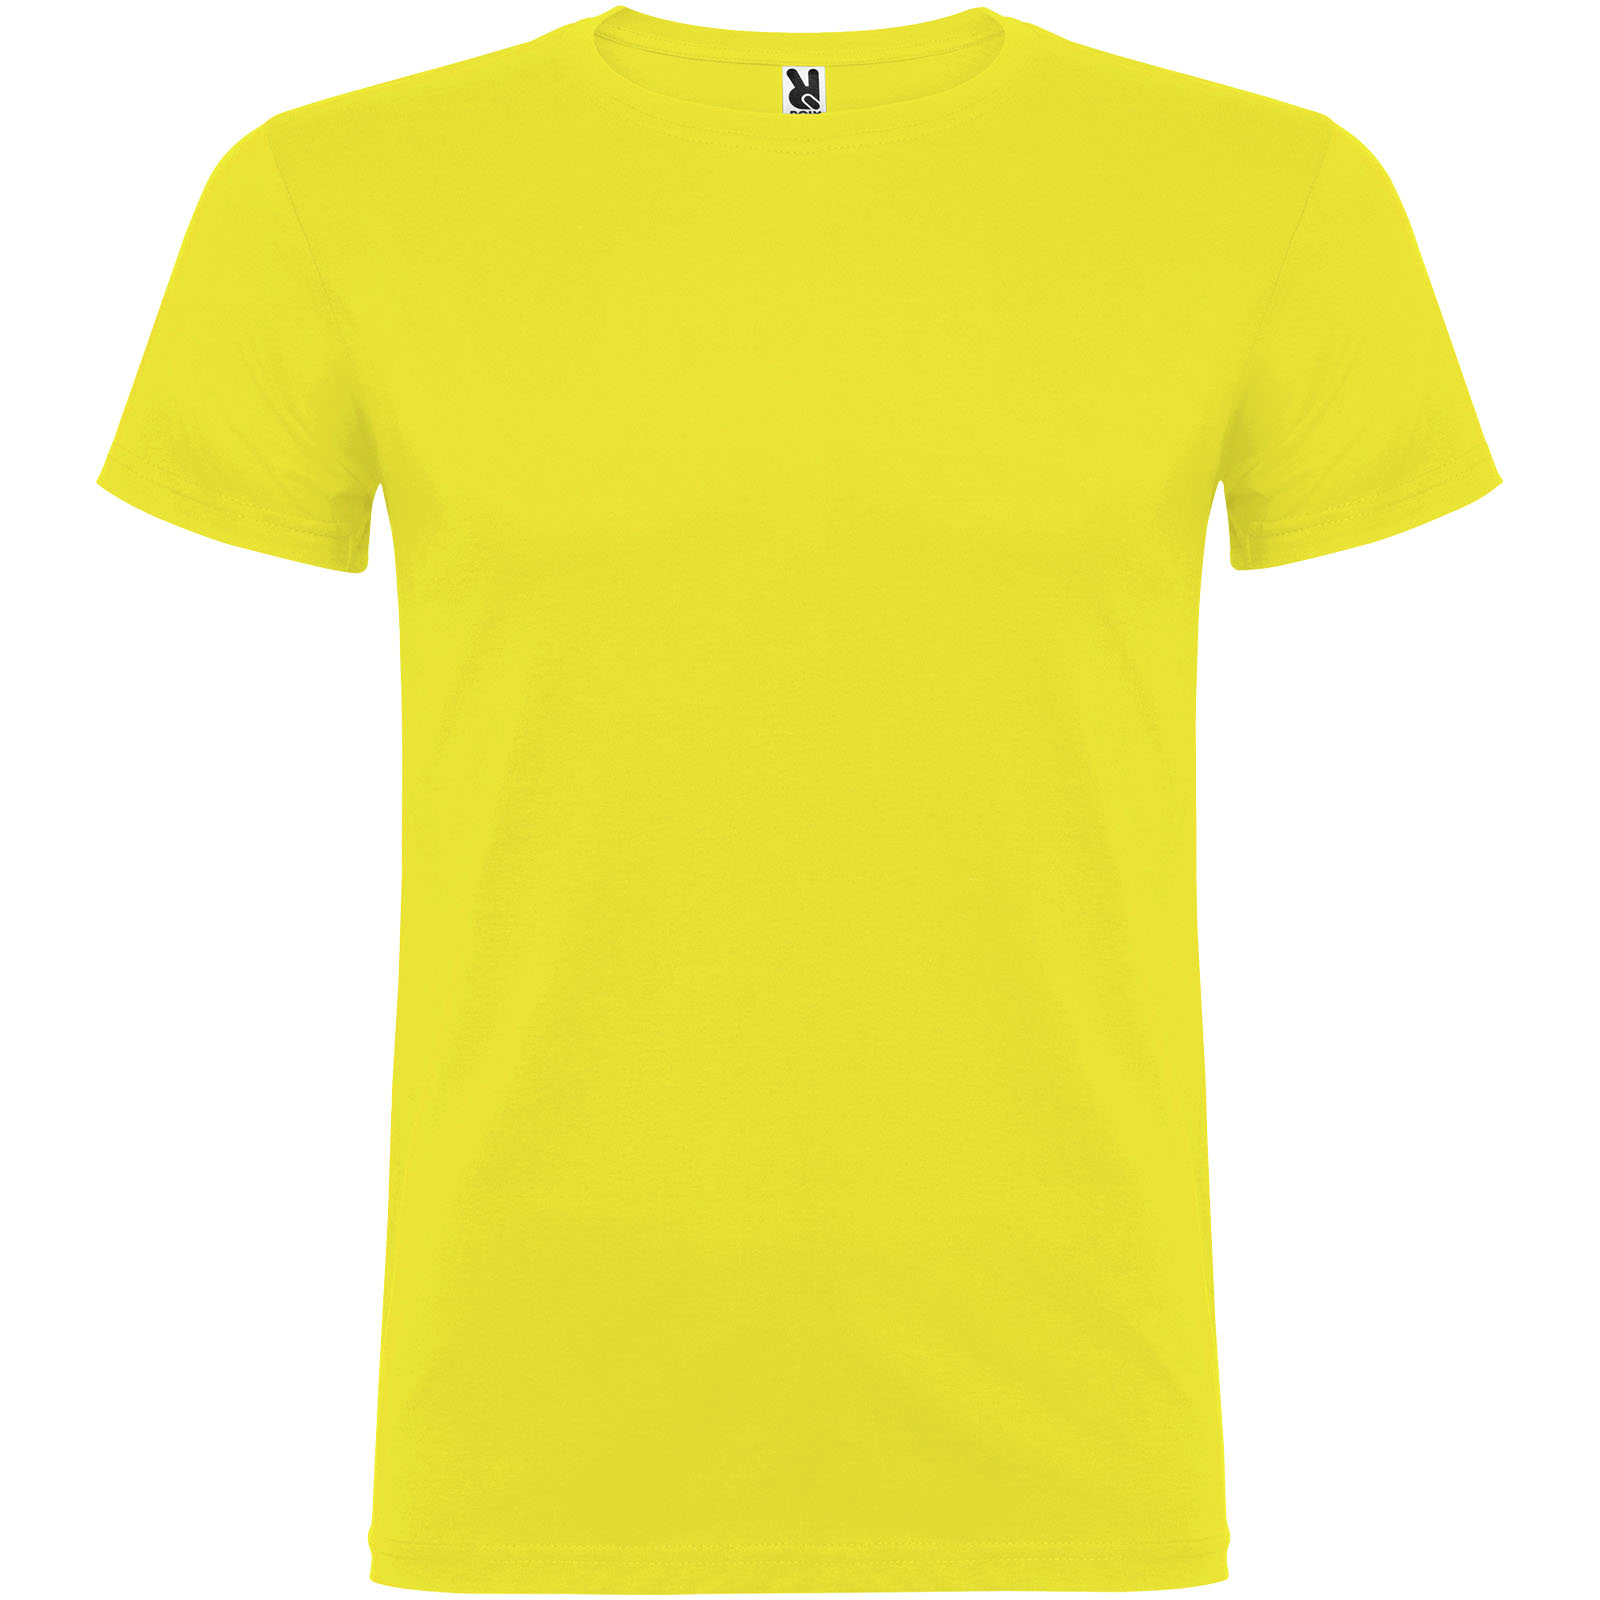 Advertising T-shirts - Beagle short sleeve men's t-shirt - 0